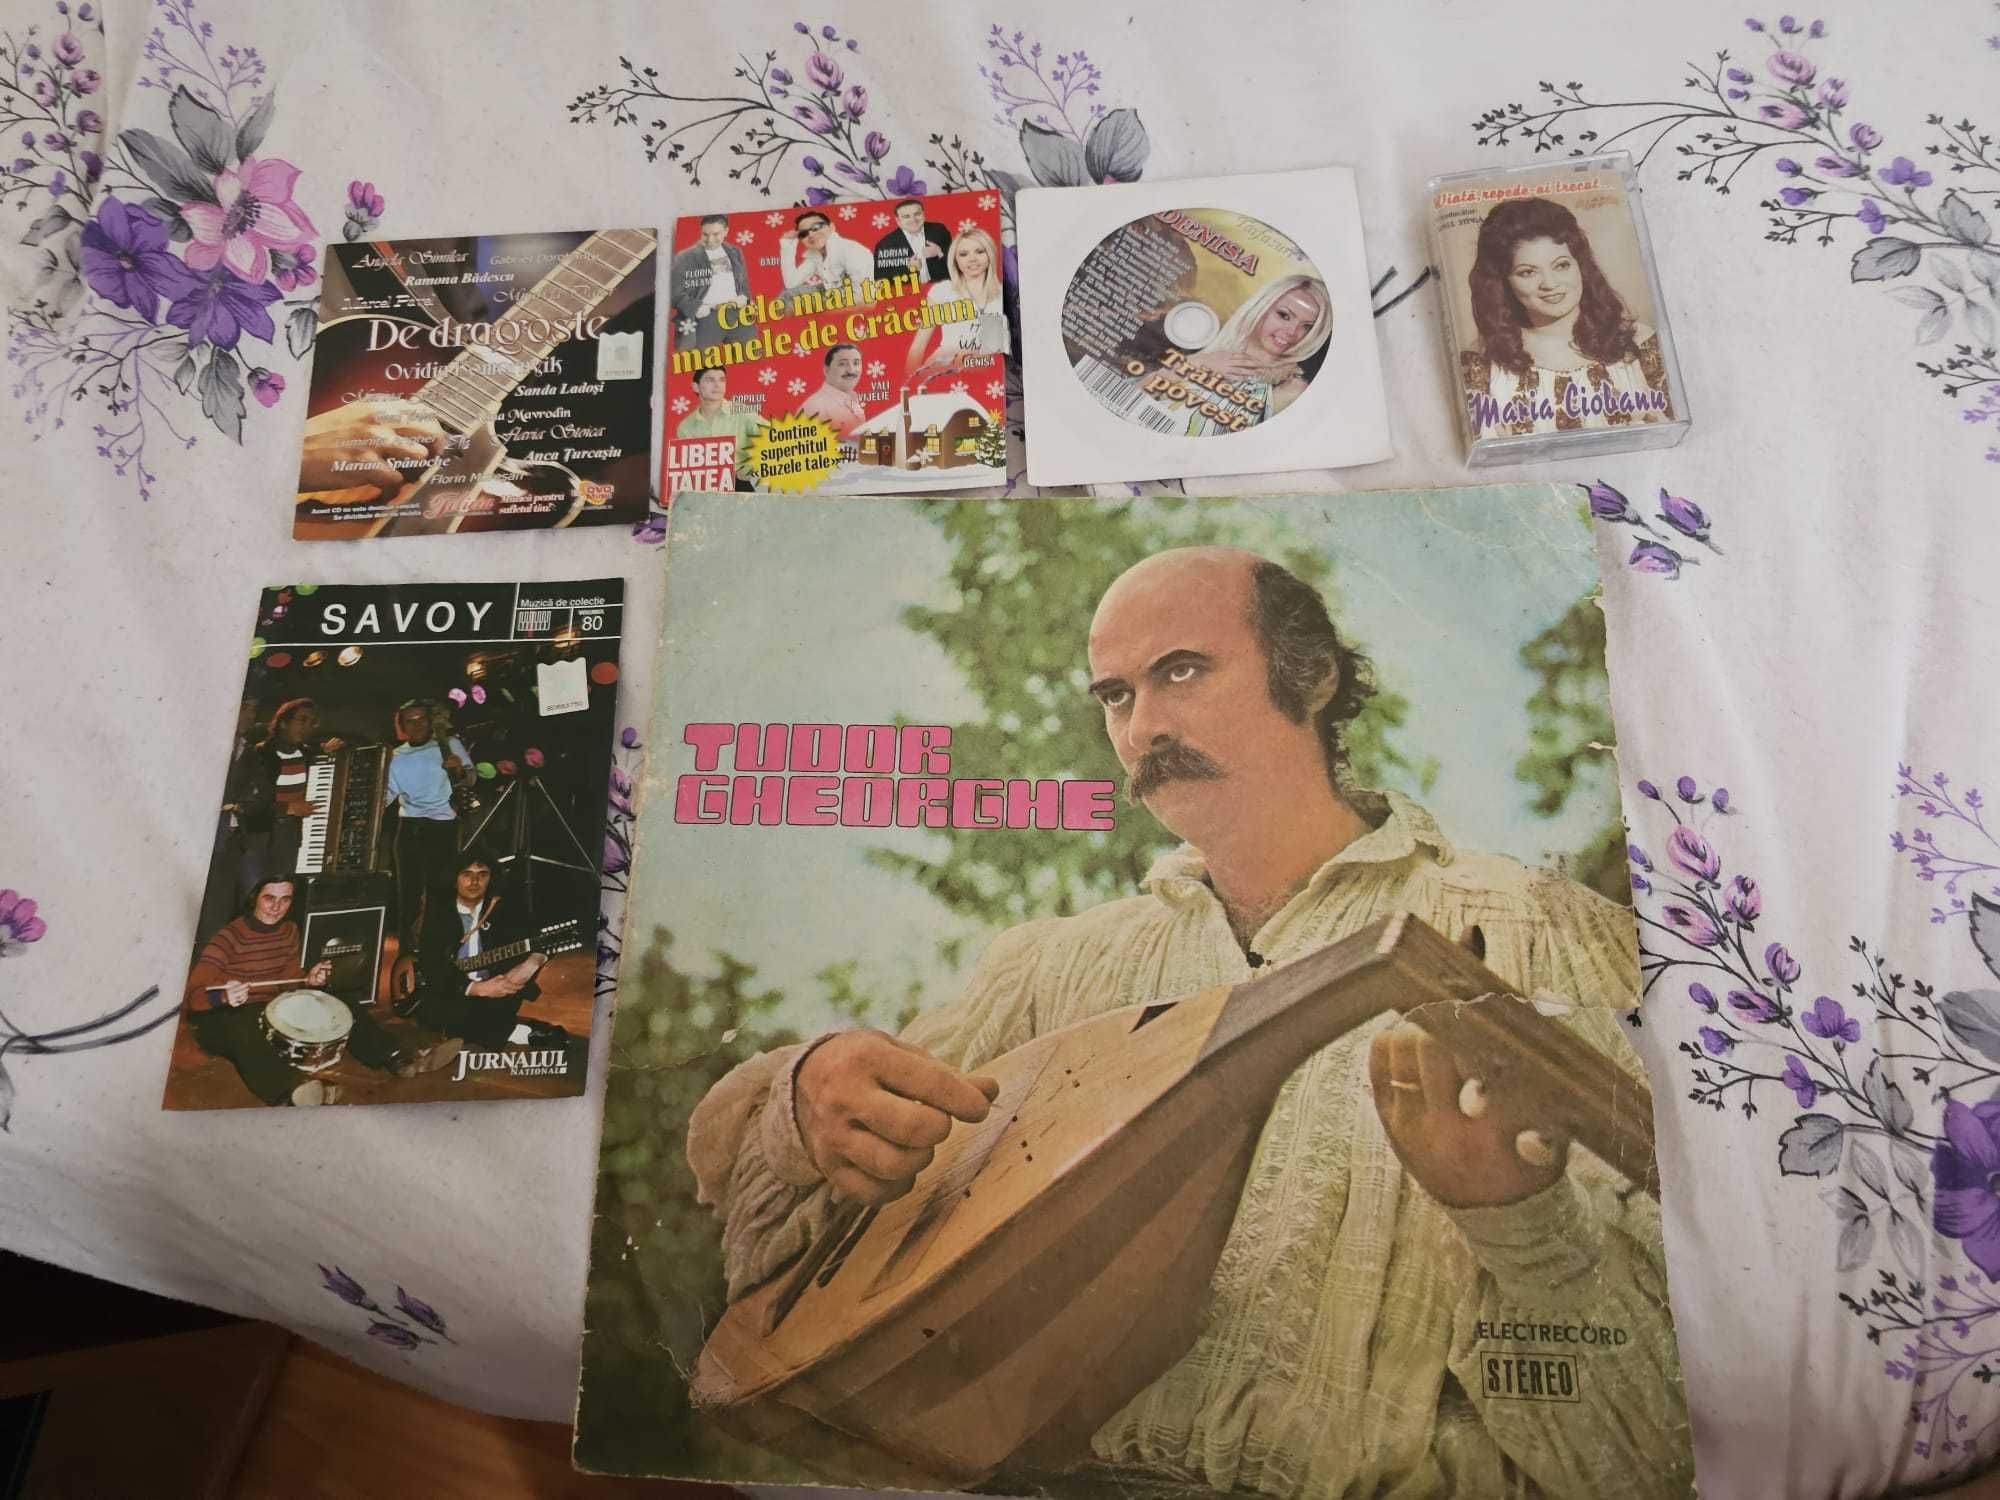 Lot CD-uri muzica romaneasca populara/manele / desene